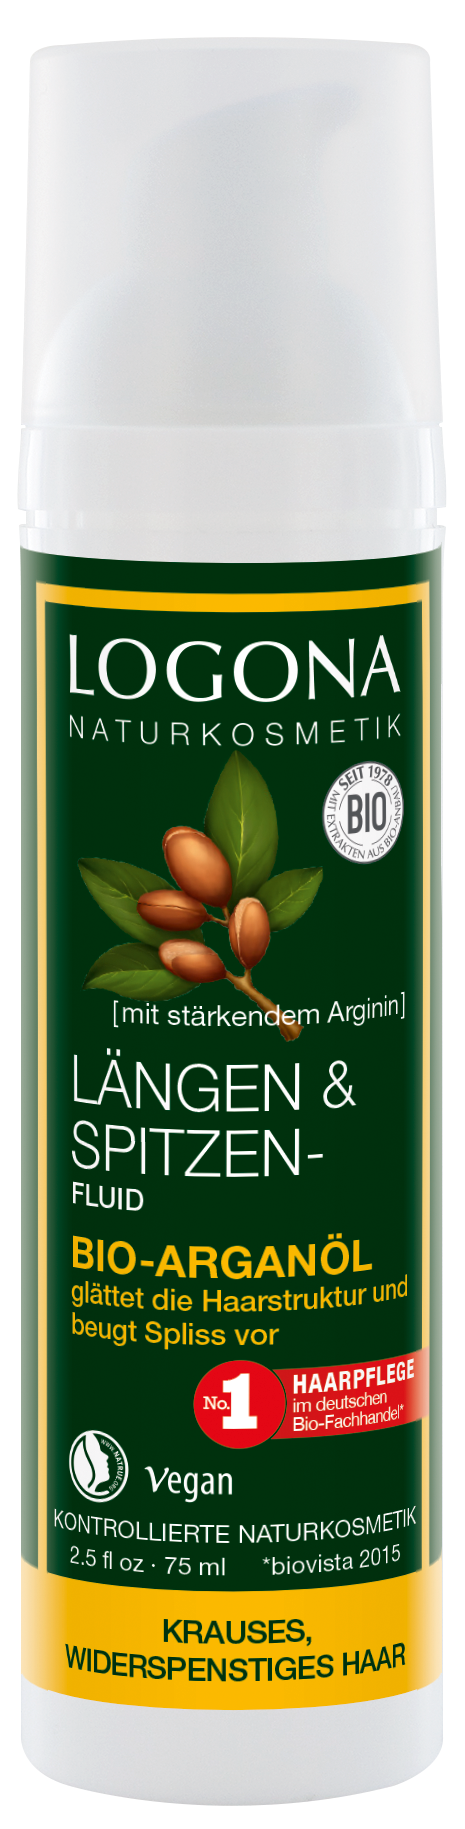 Längen- Naturkosmetik LOGONA Bio-Arganöl | und Spitzenfluid